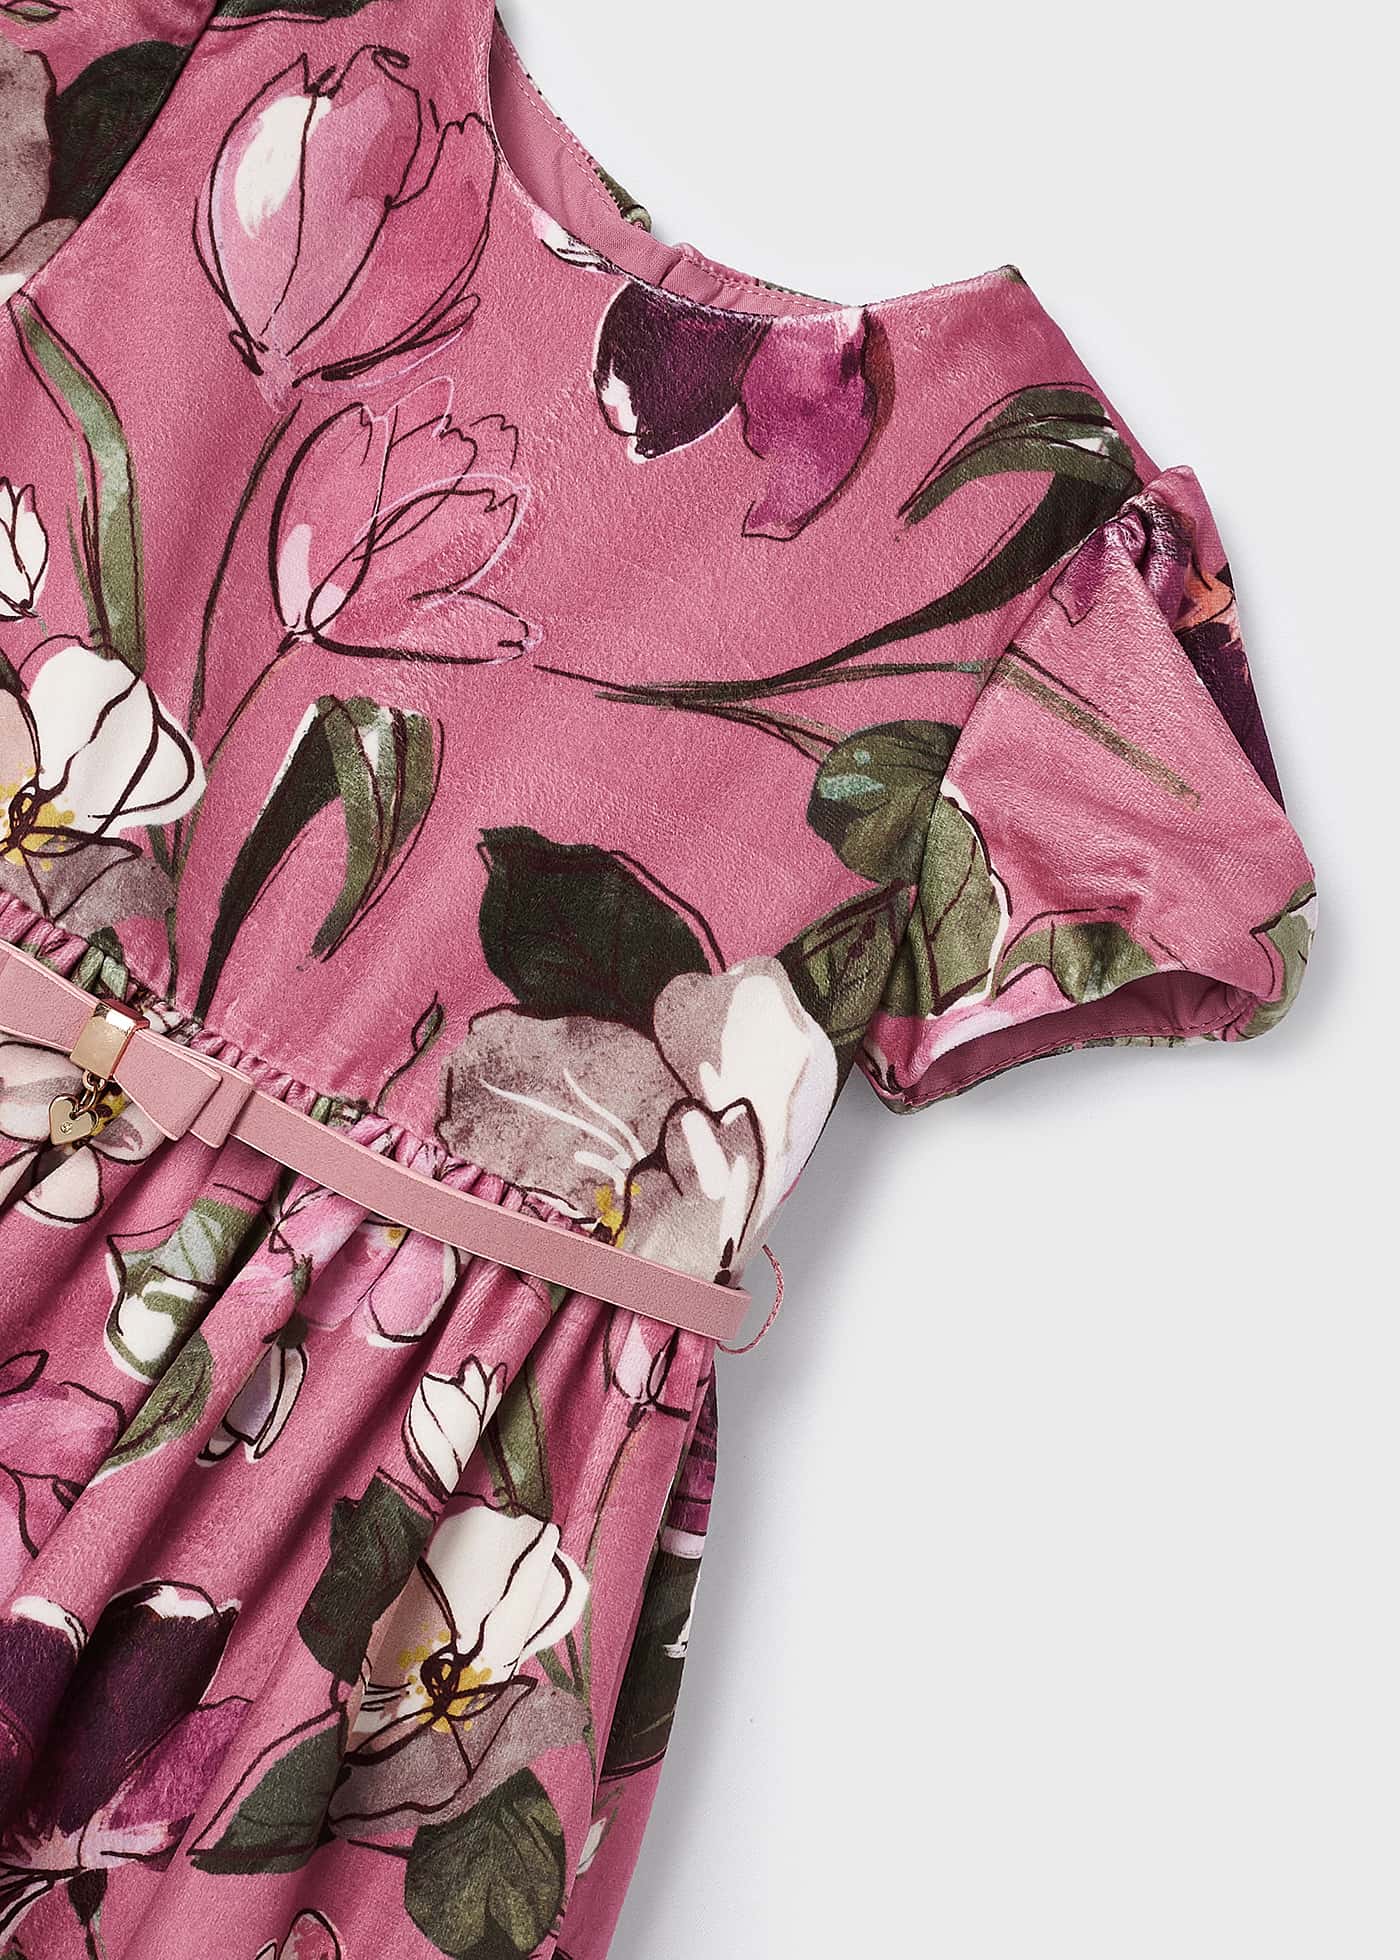 Mayoral Baby Girls Pink Floral Print T-Shirt & Dungaree Skirt Set